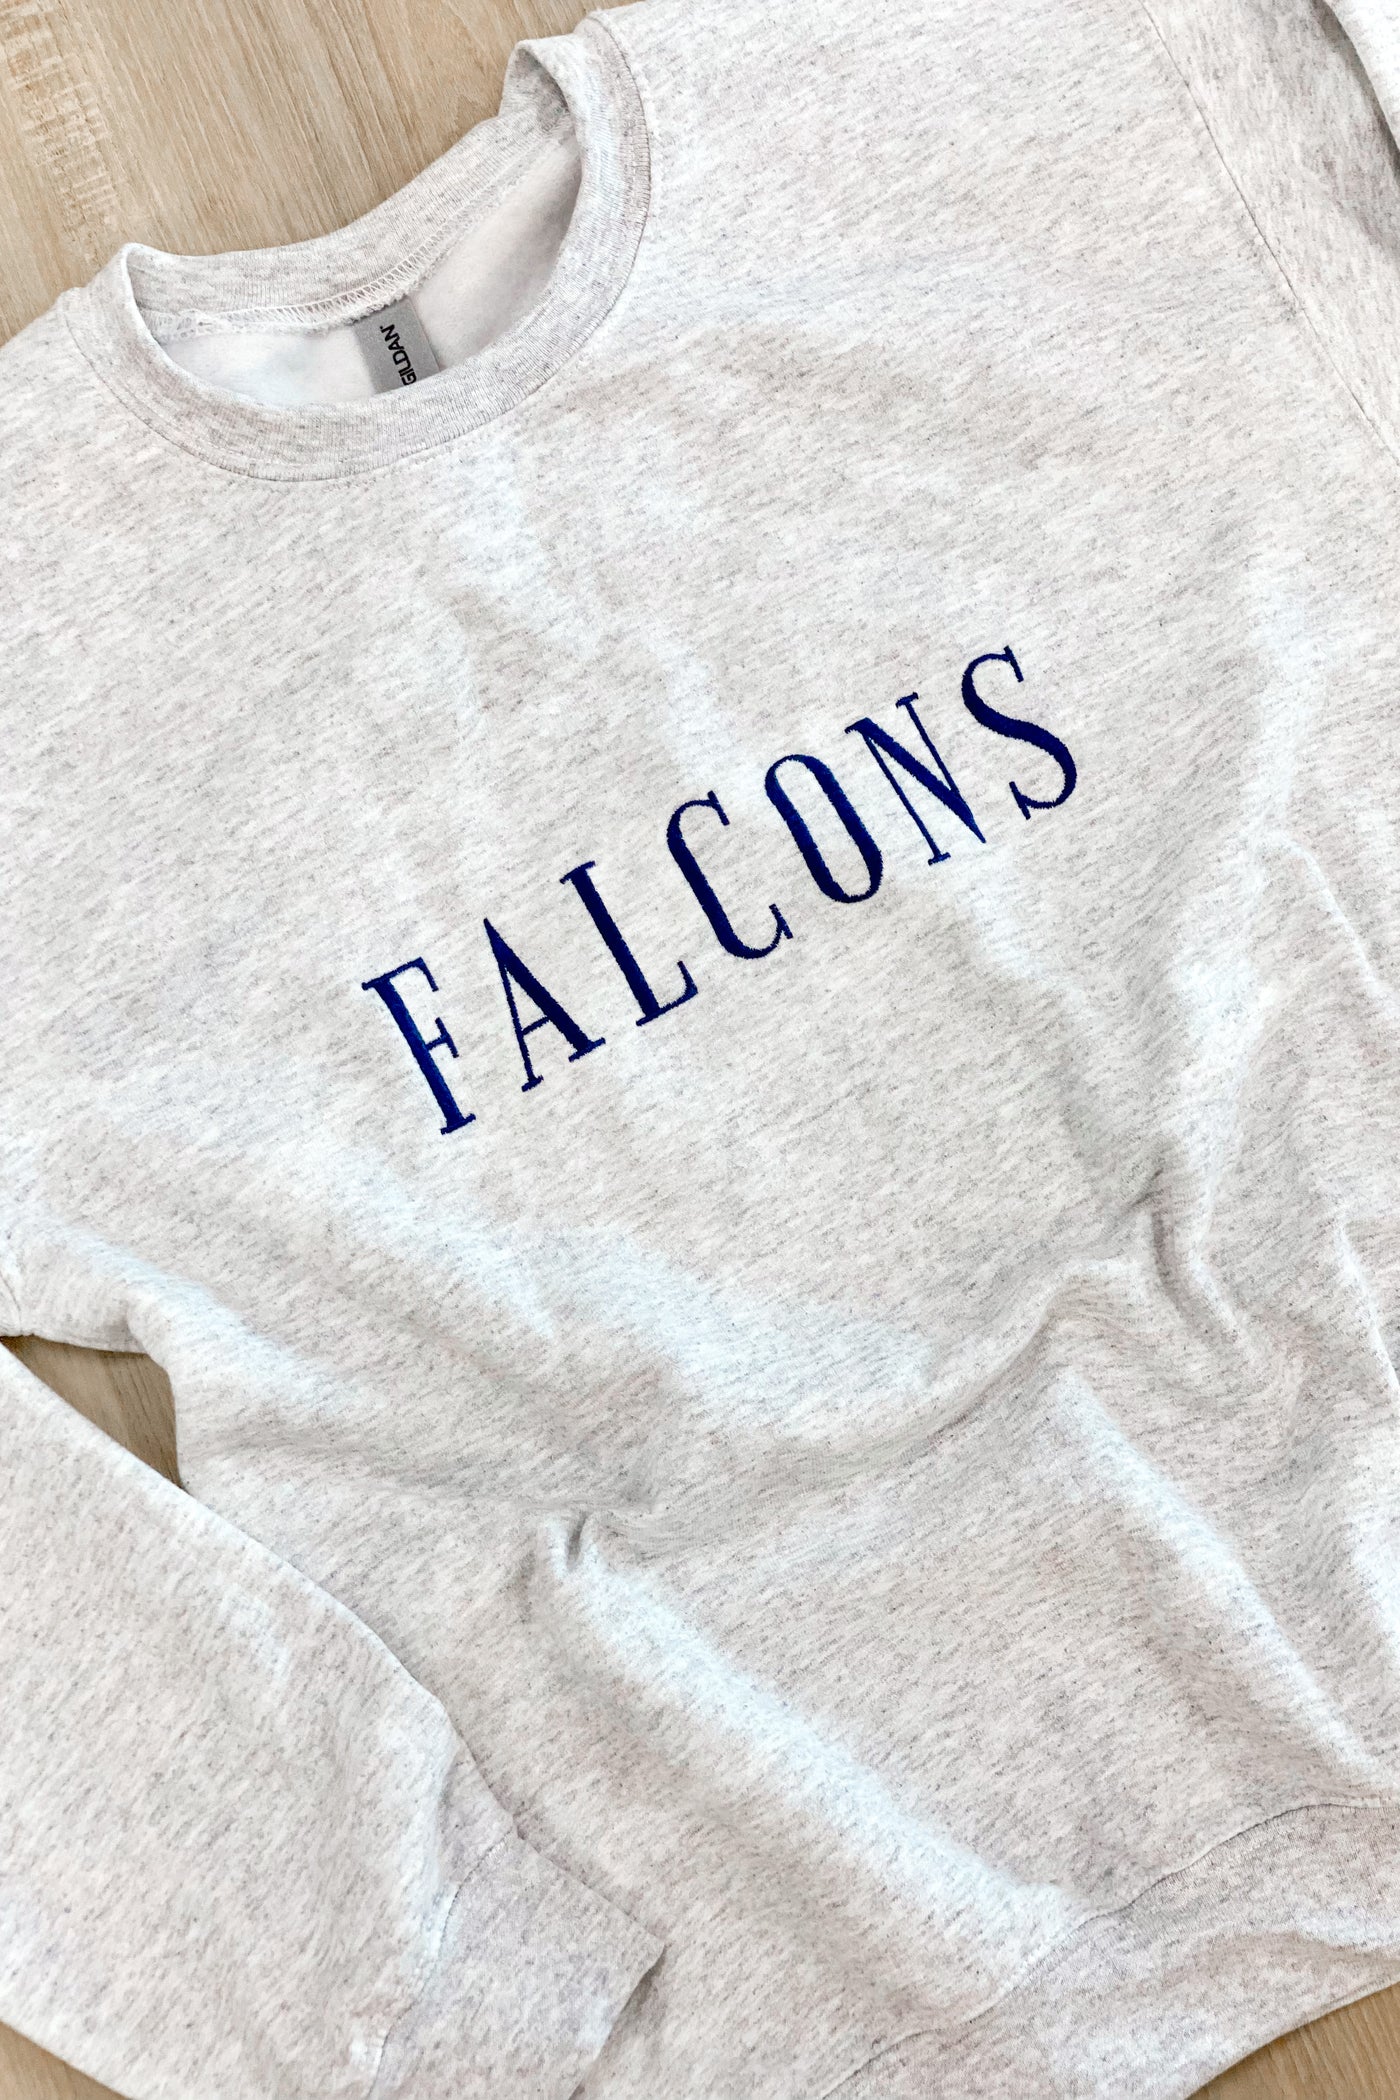 Falcons Vintage Serif Sweatshirt